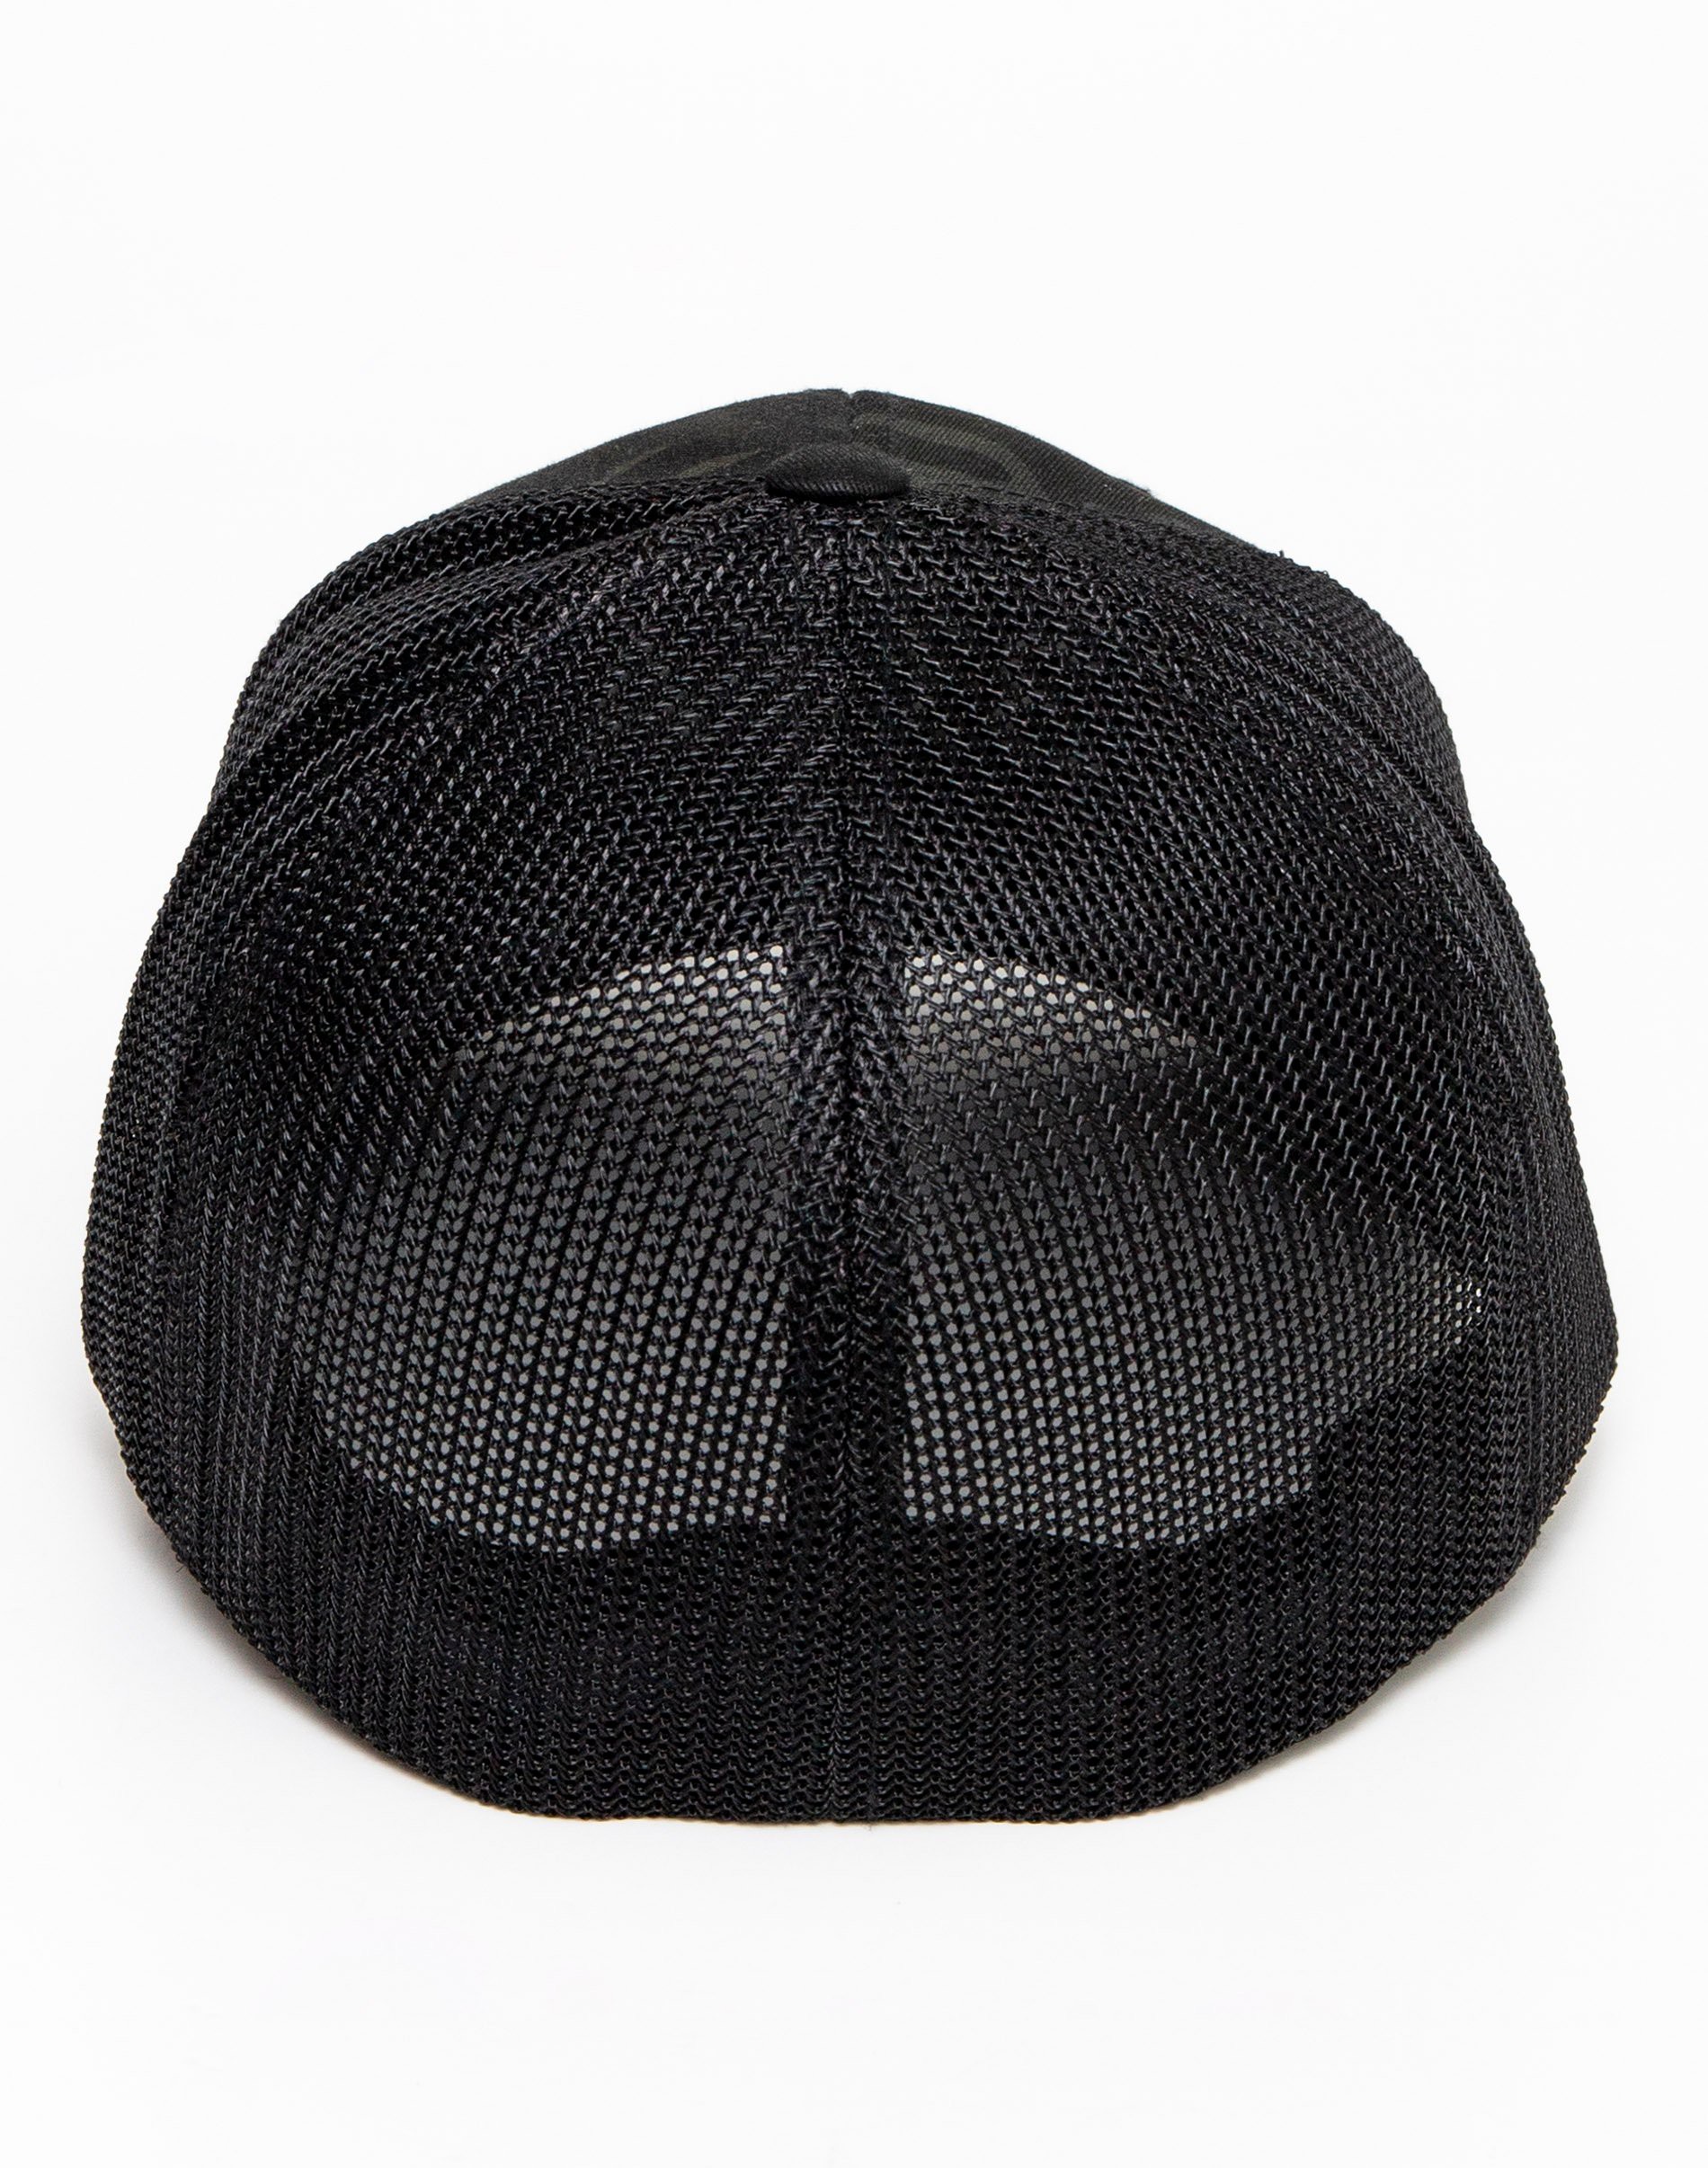 30A® Flex Fit Hat - Black Camo - 30A Gear